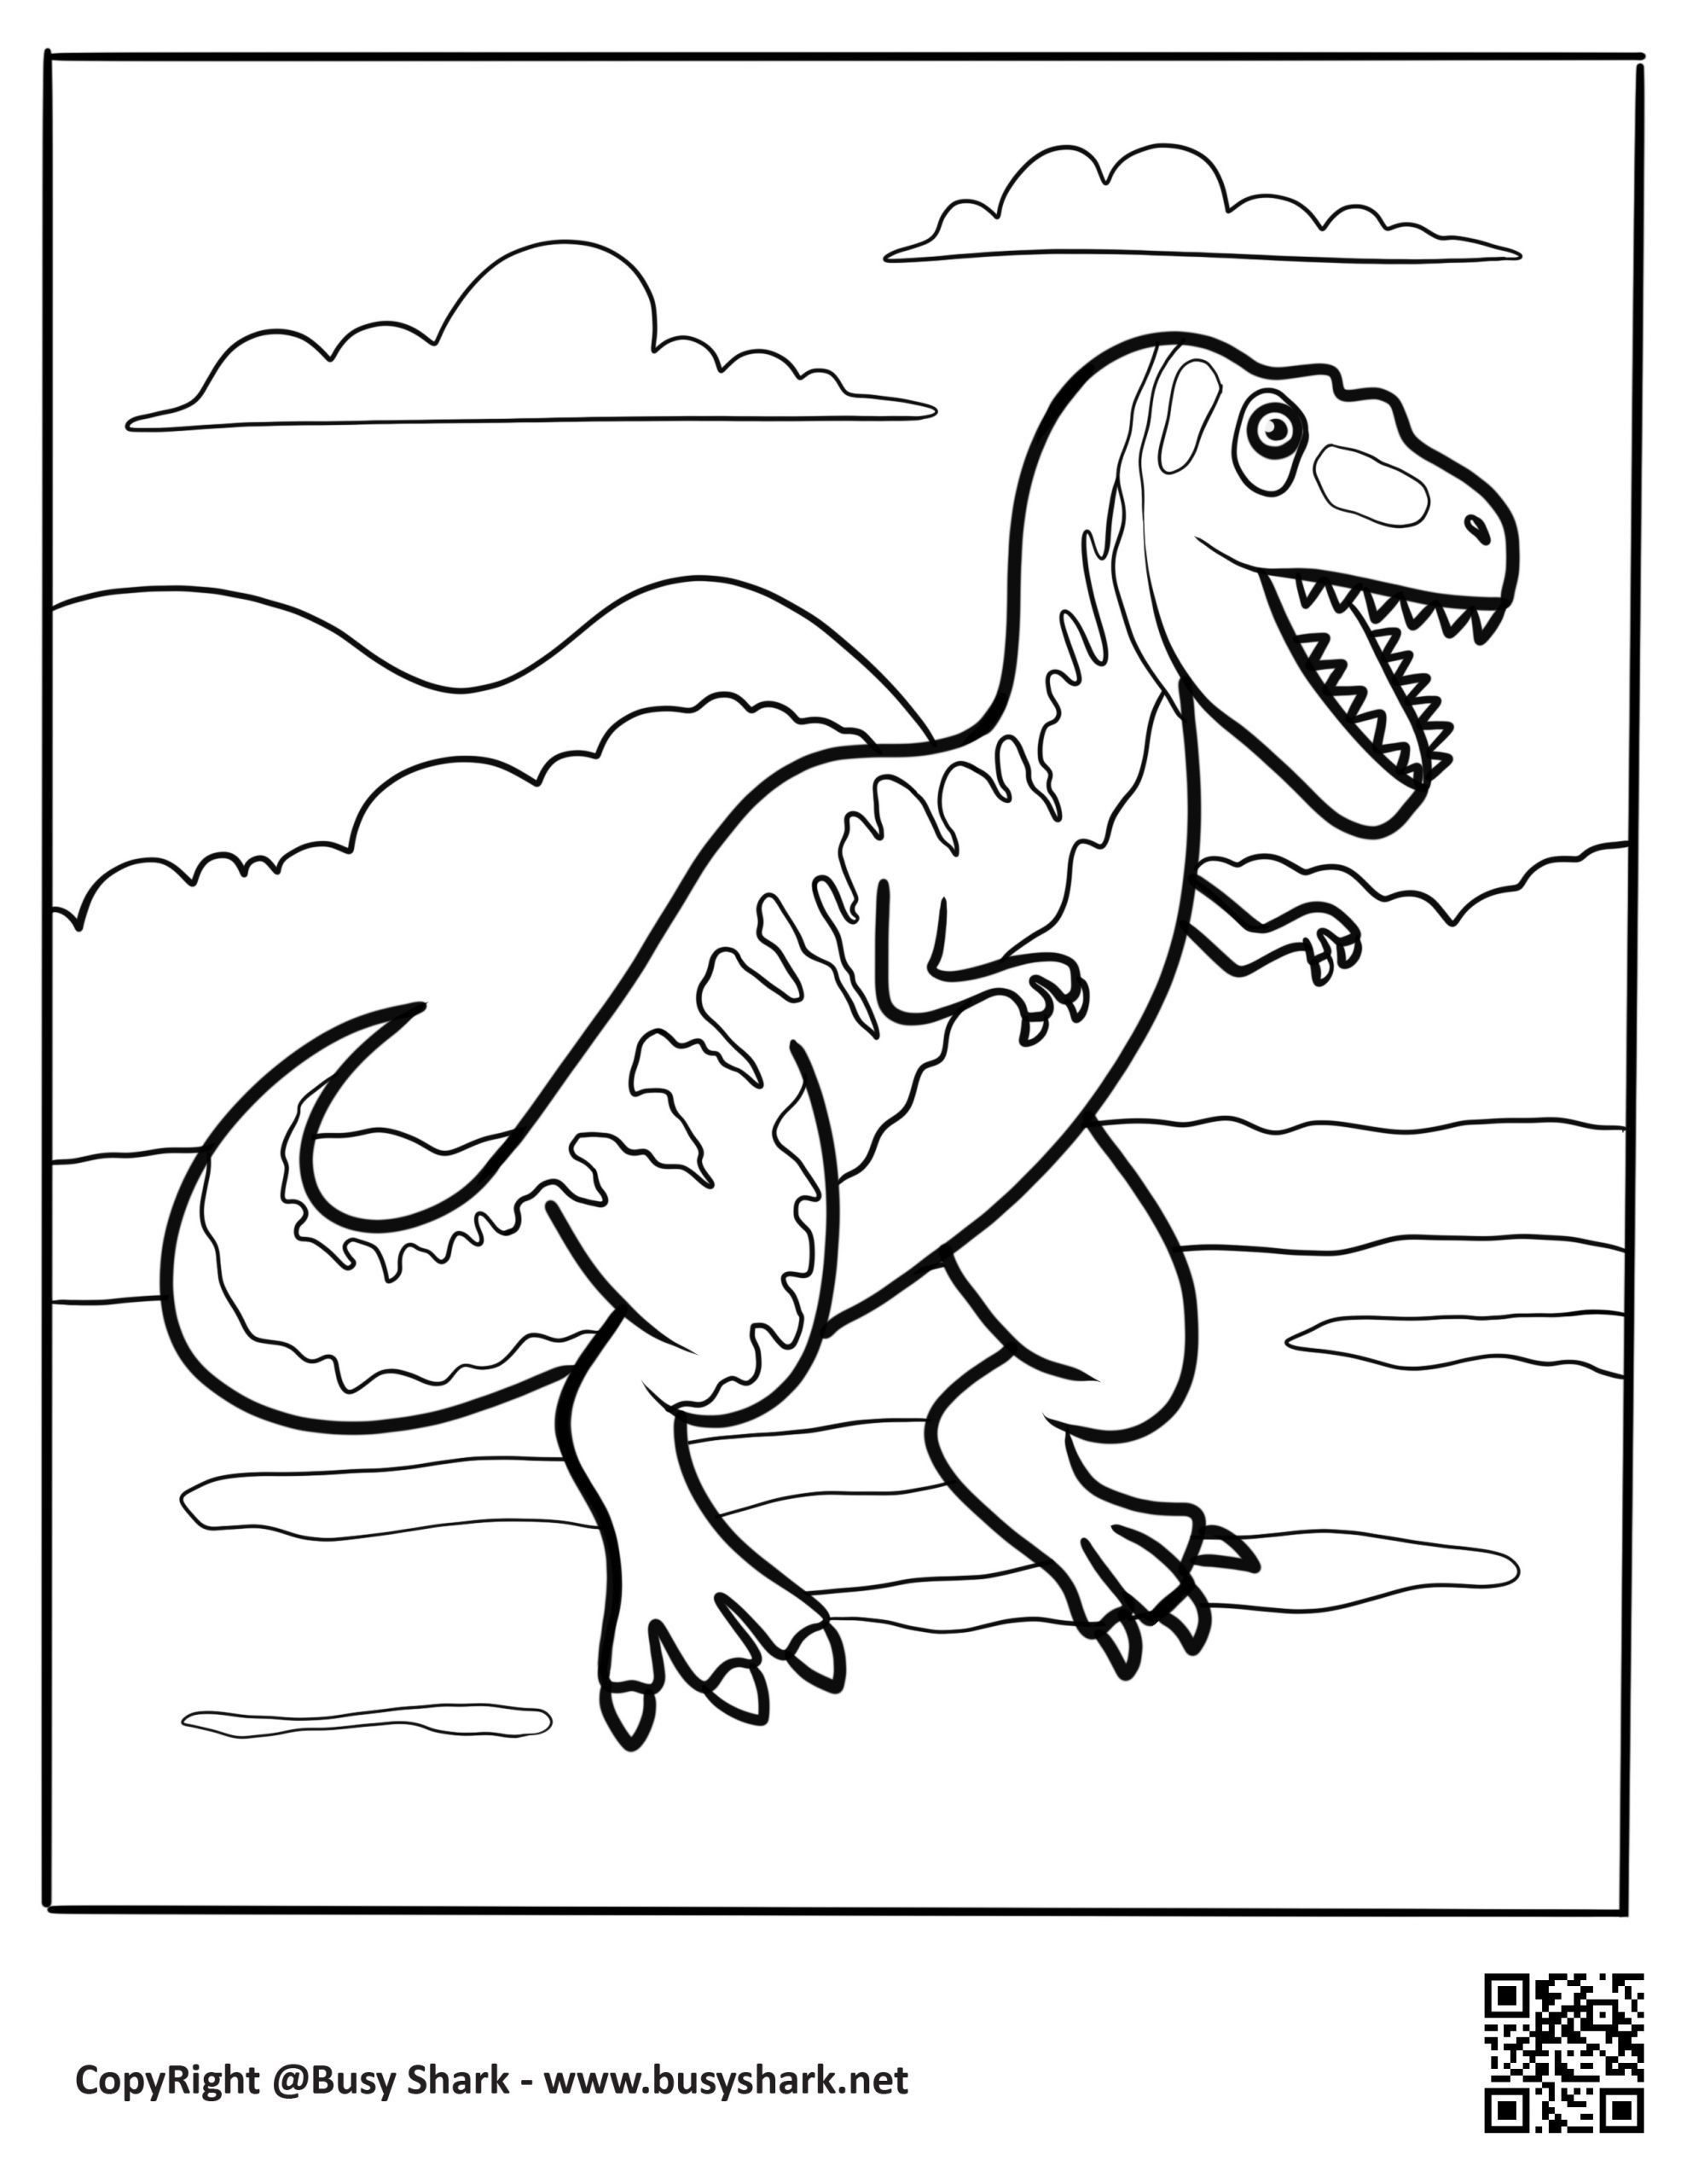 Giganotosaurus coloring page free printable